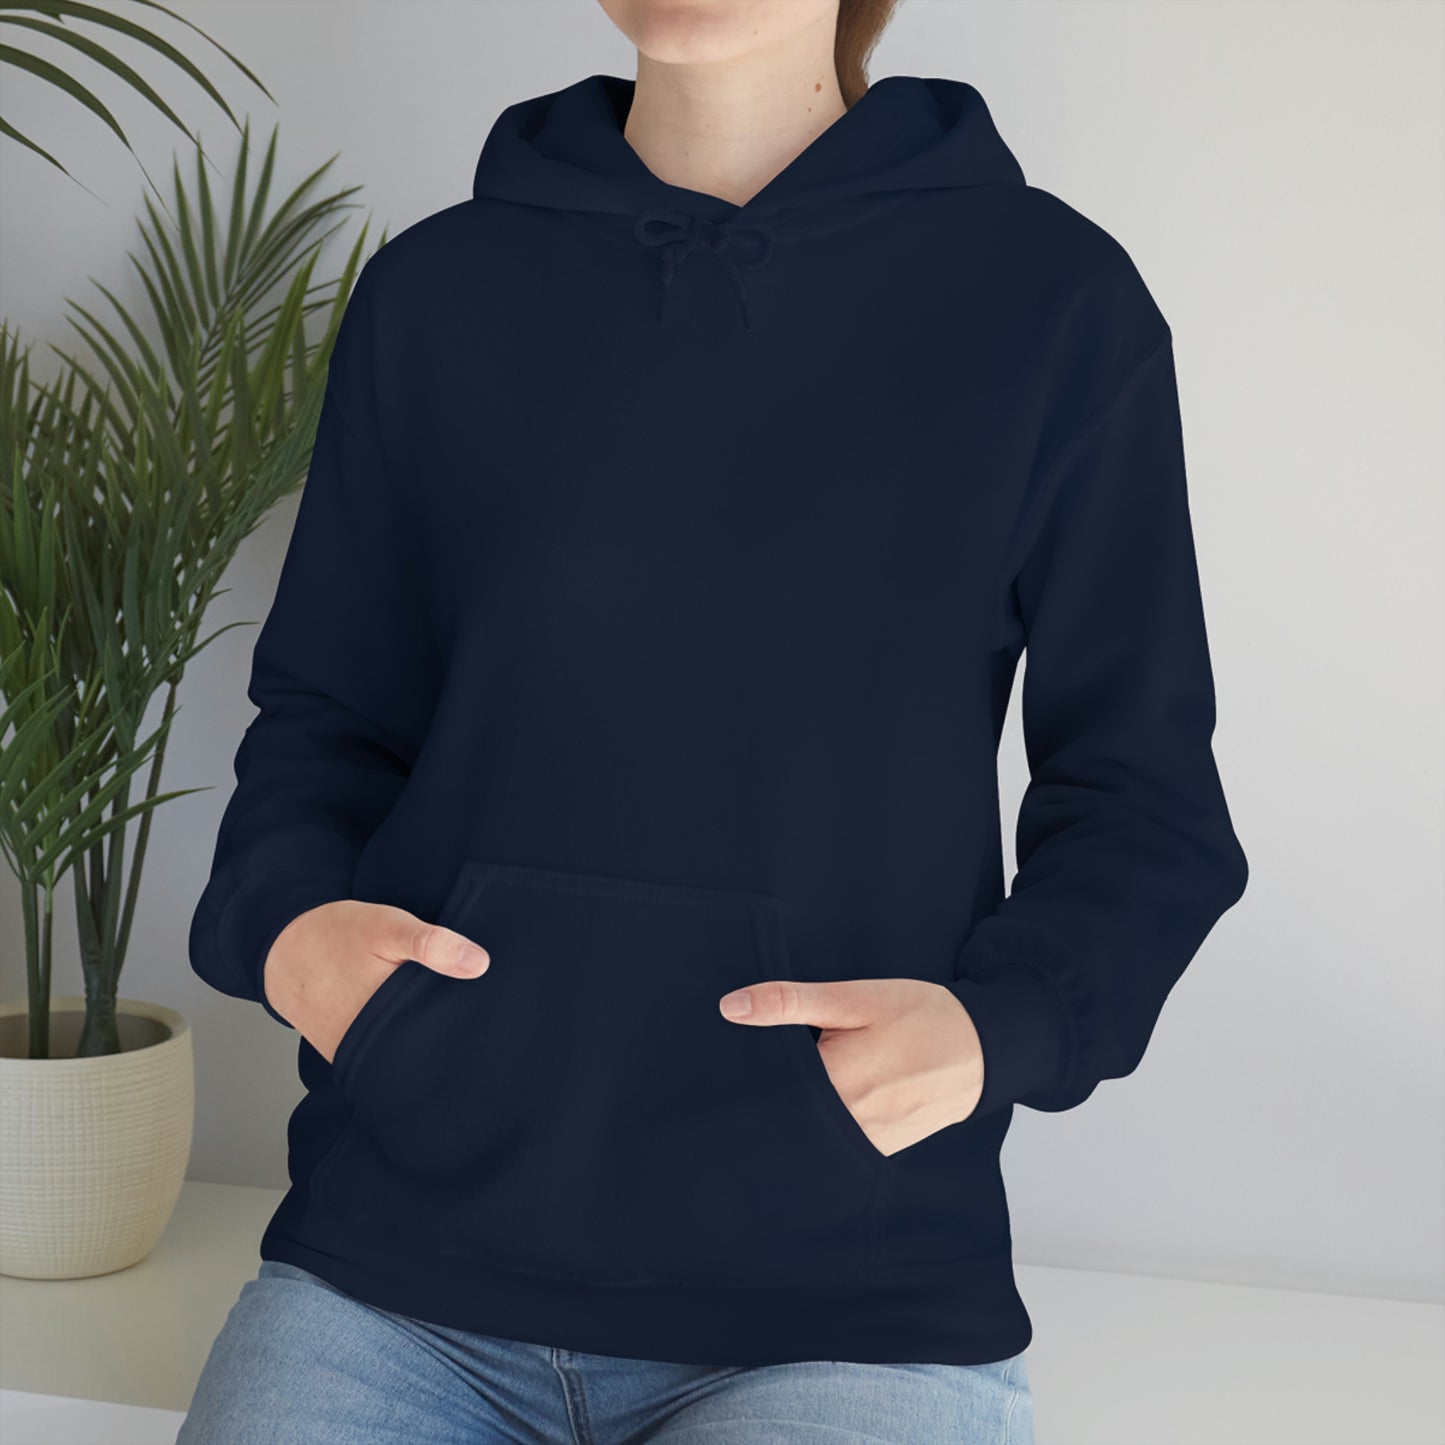 A Healthy Addiction Unisex Sweatshirt